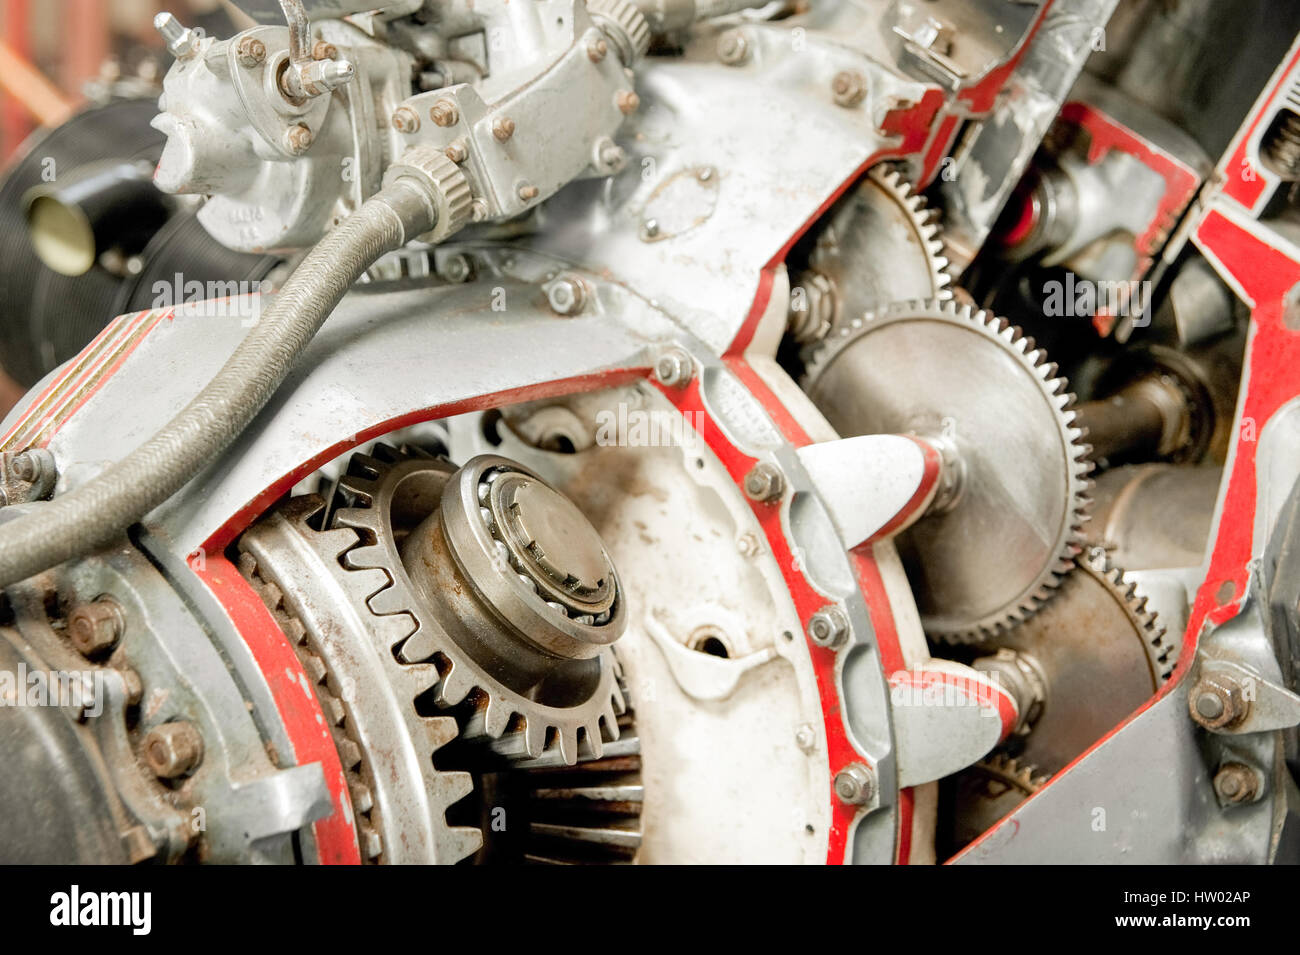 precision mechanics inside a vintage aircraft engine Stock Photo